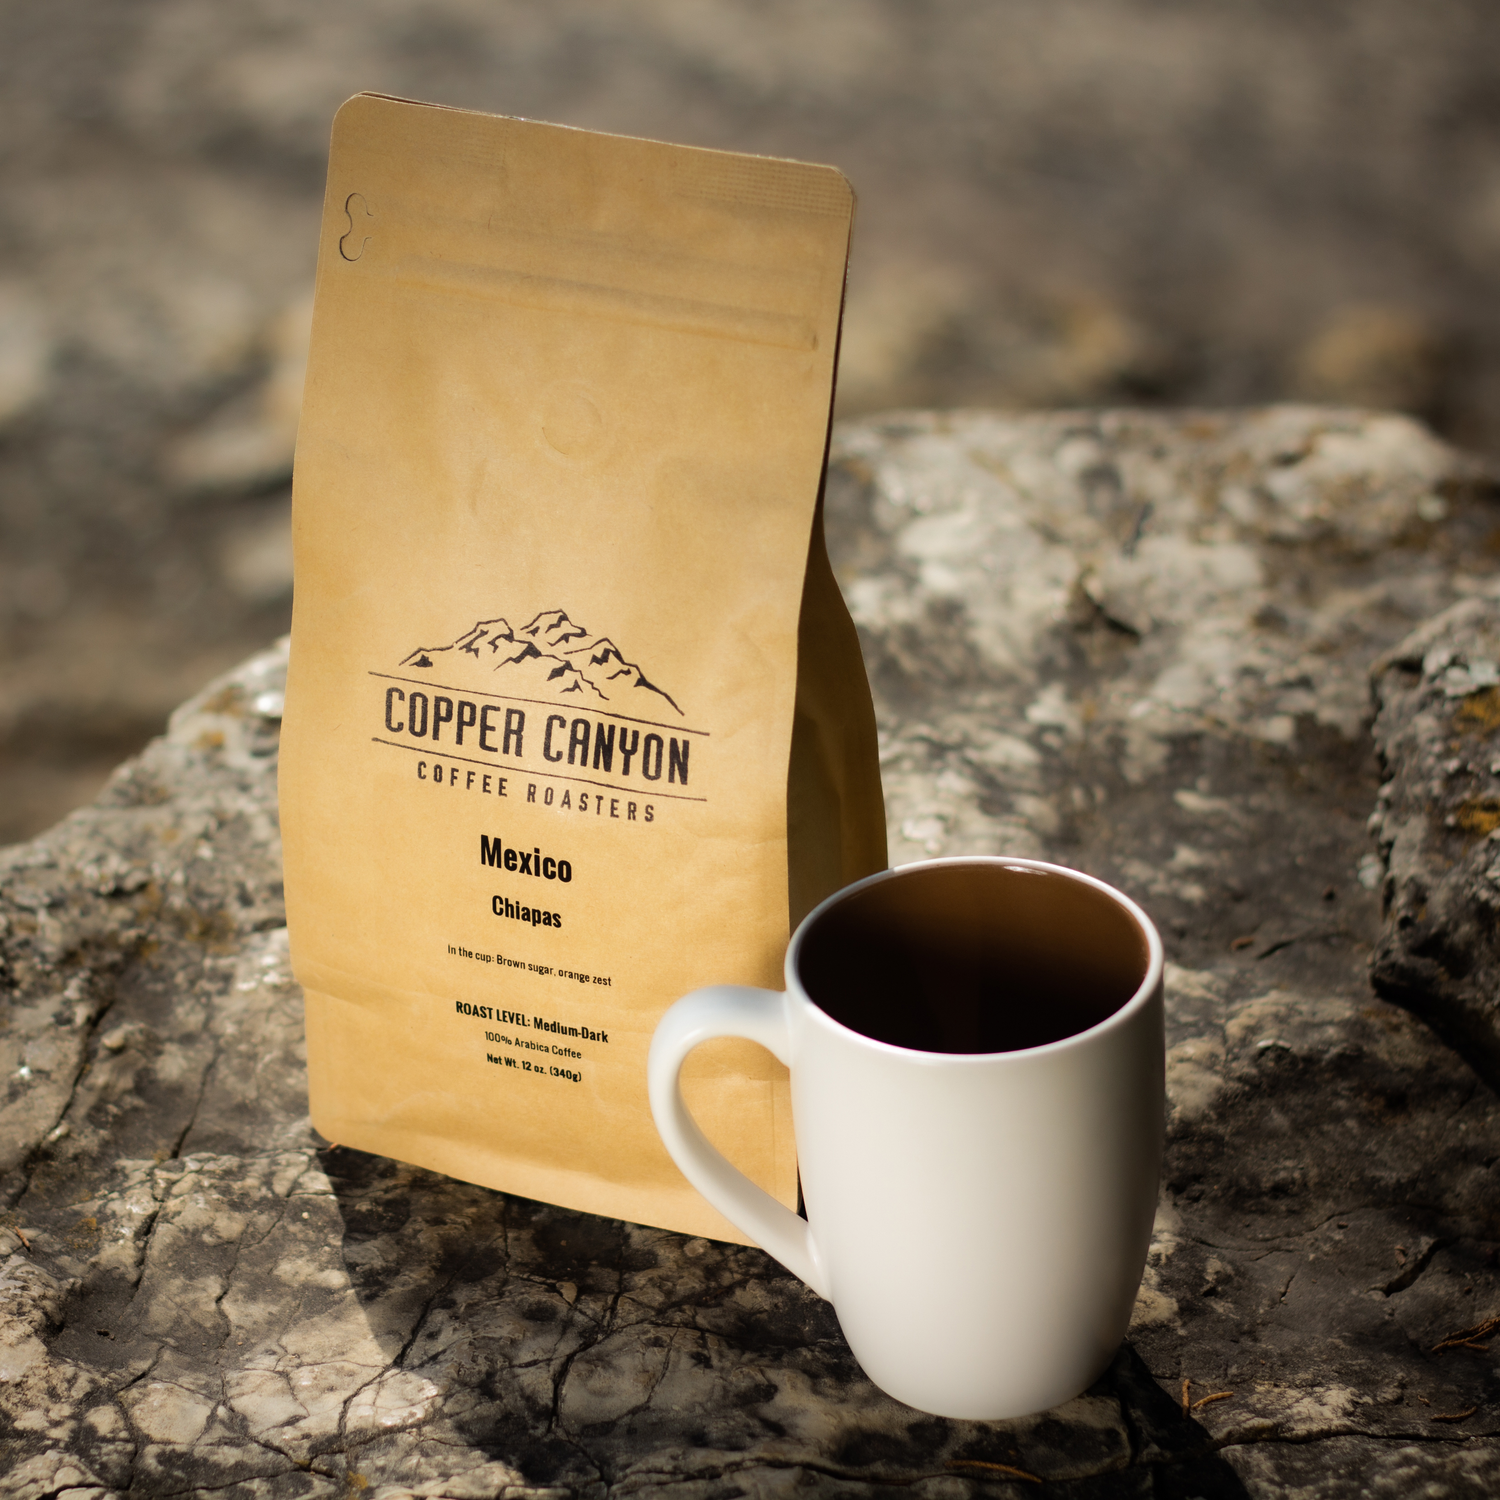 ceramic coffee mug next to Copper Canyon's Mexico coffee